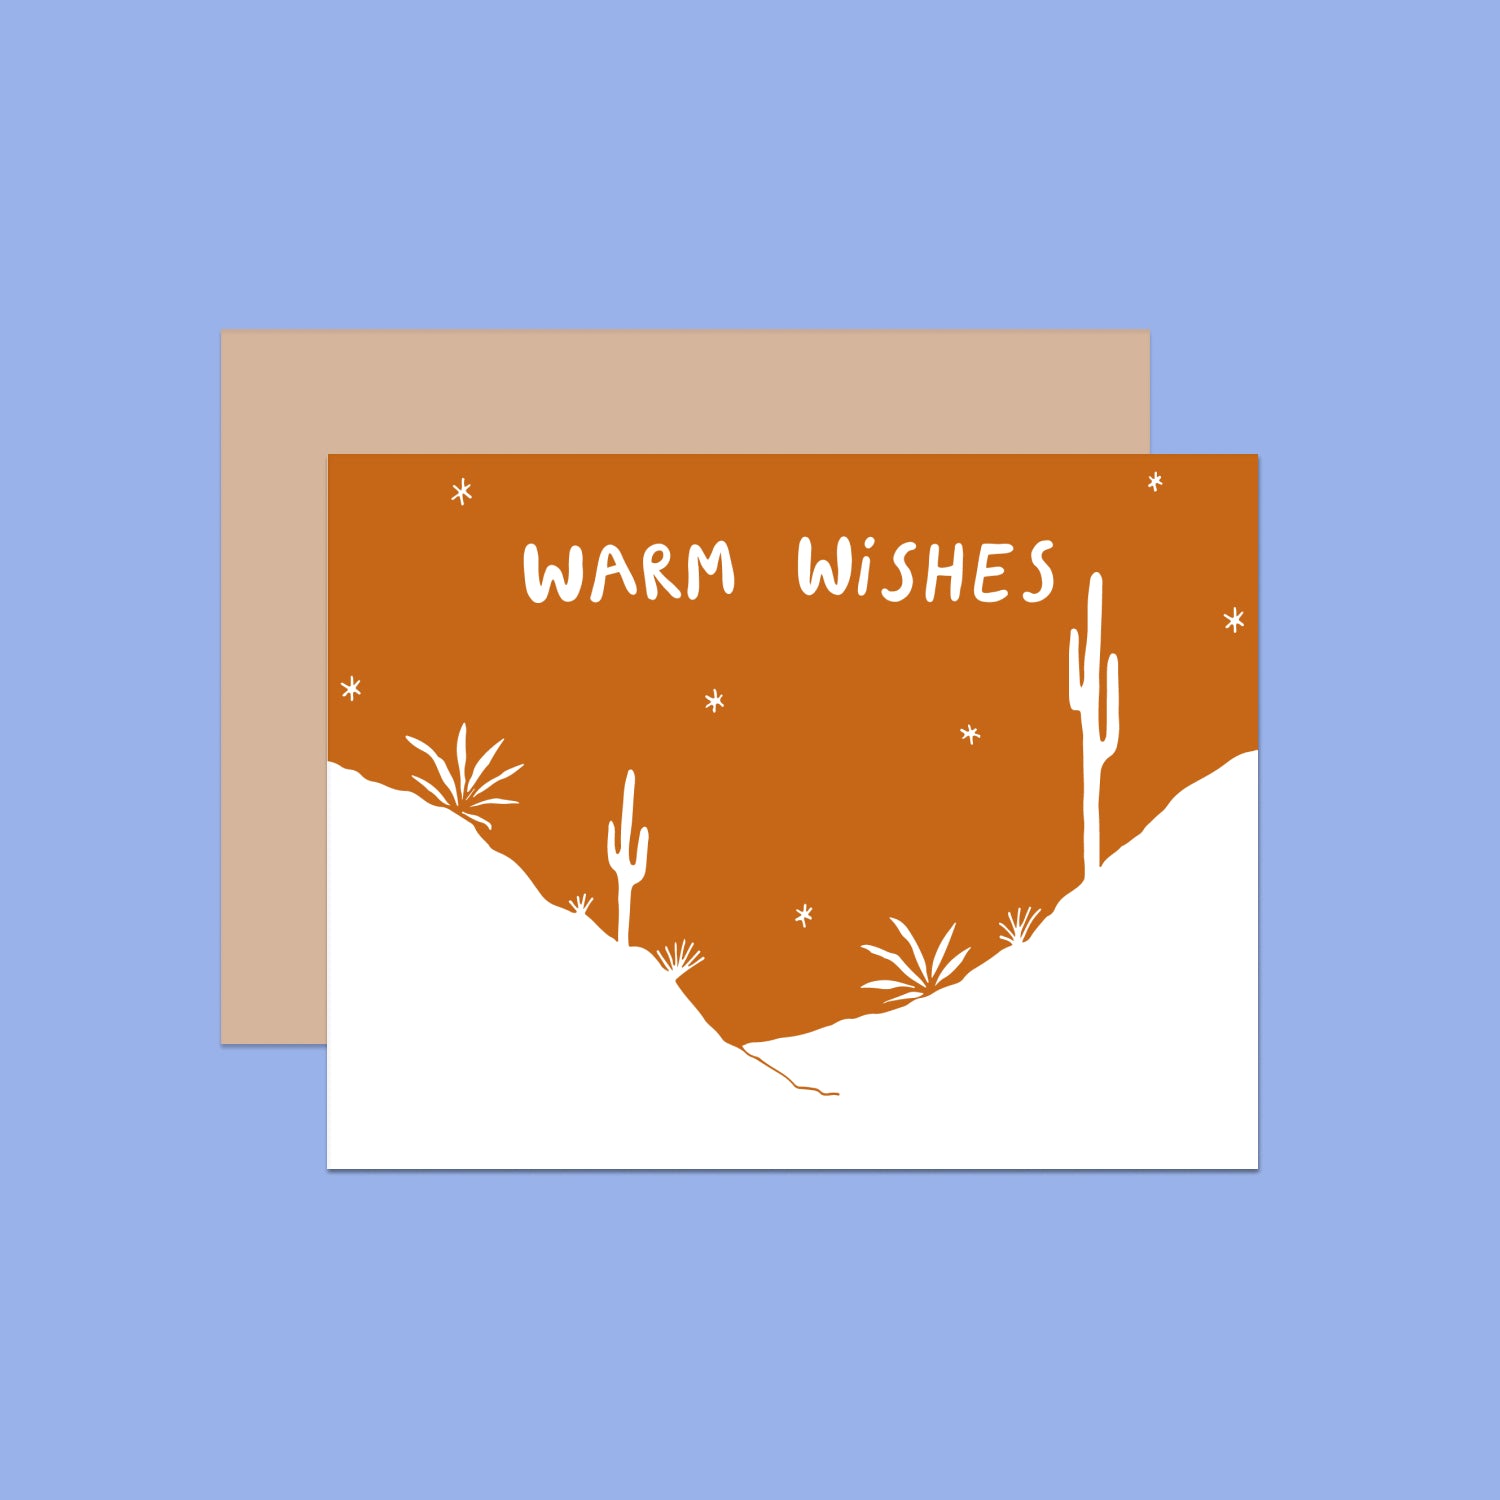 WARM WISHES